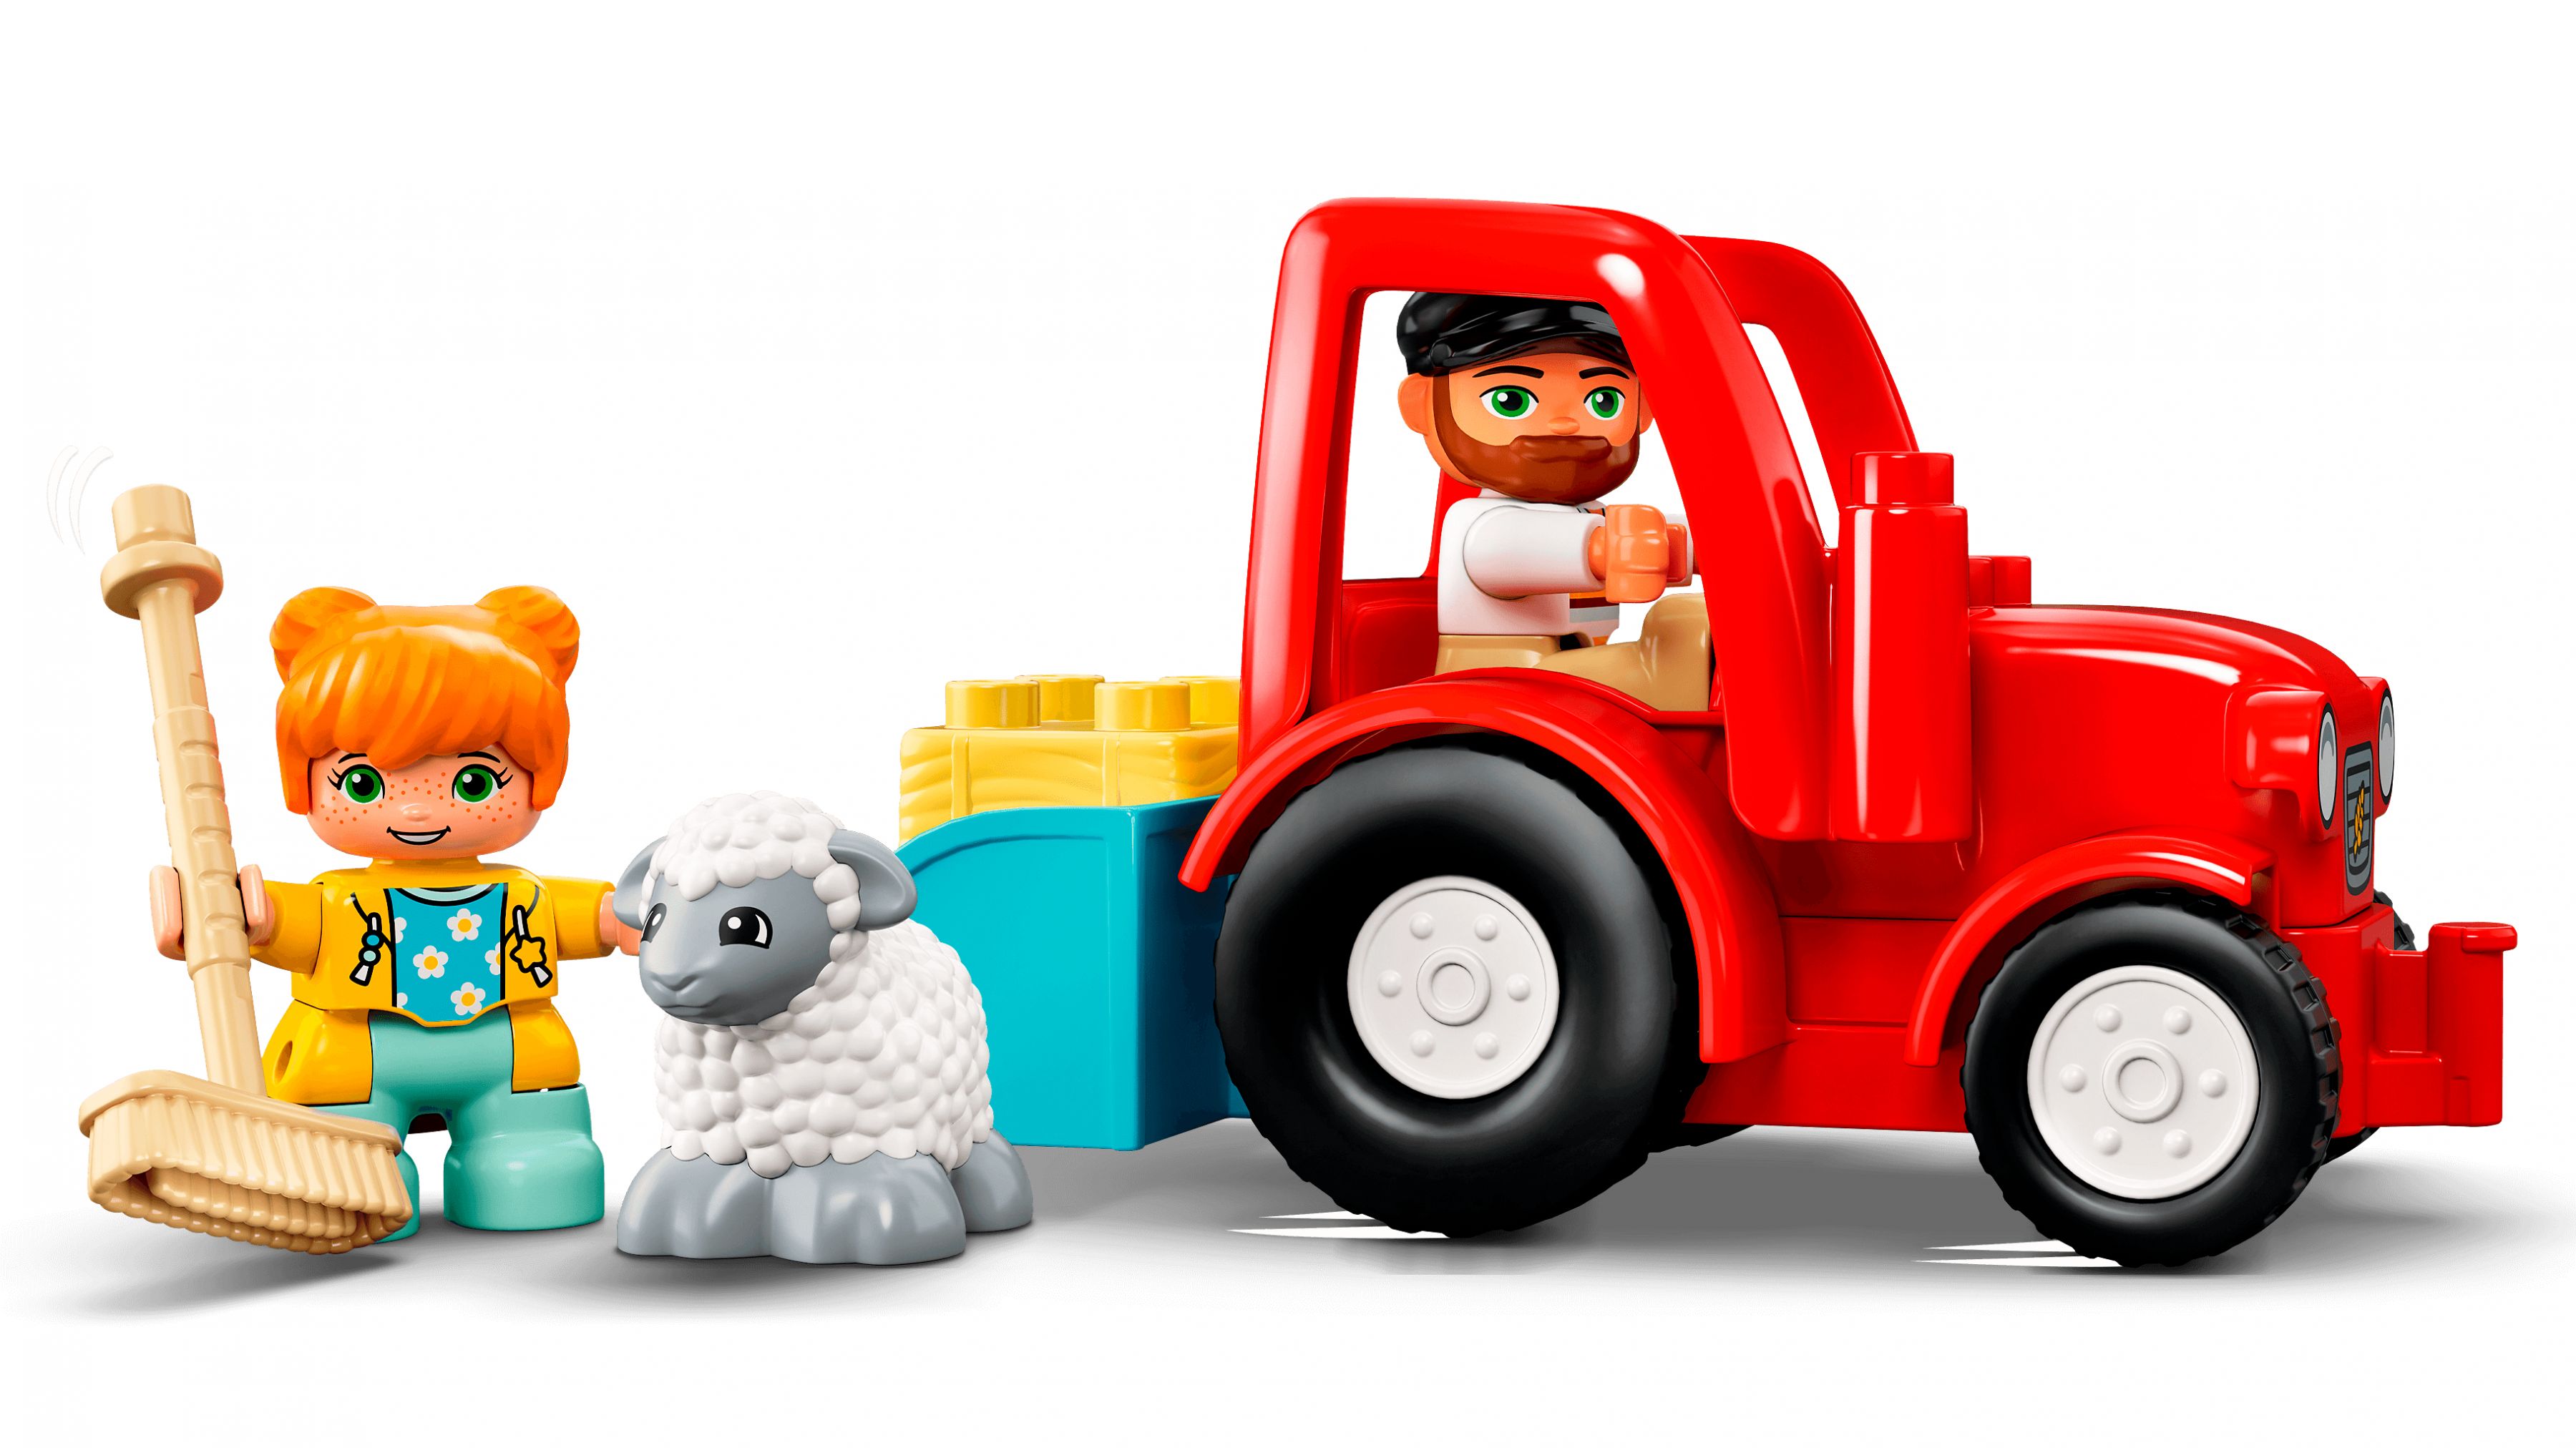 LEGO Duplo 10950 Traktor und Tierpflege LEGO_10950_web_sec01_nobg.jpg